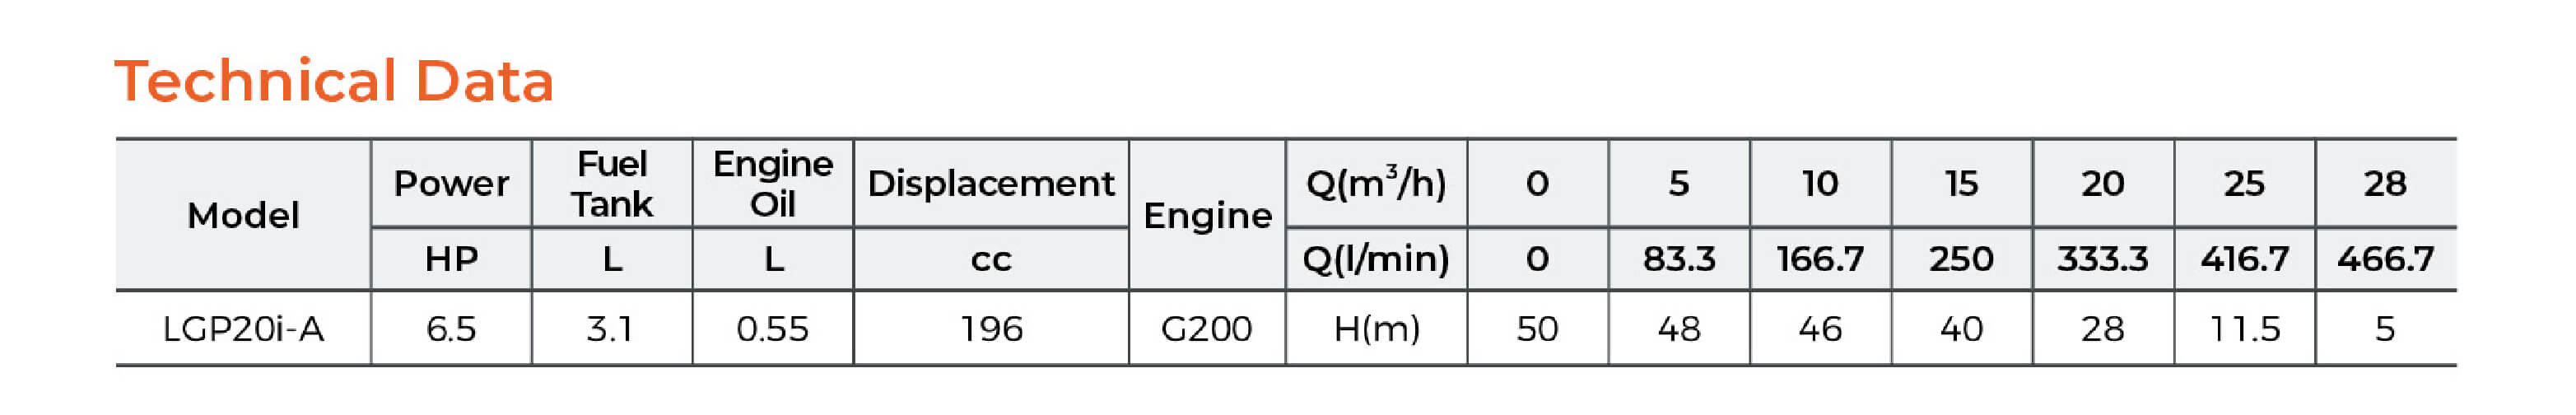 LGP20i-A Gasoline Cast Iron Centrifugal Pump Technical Data